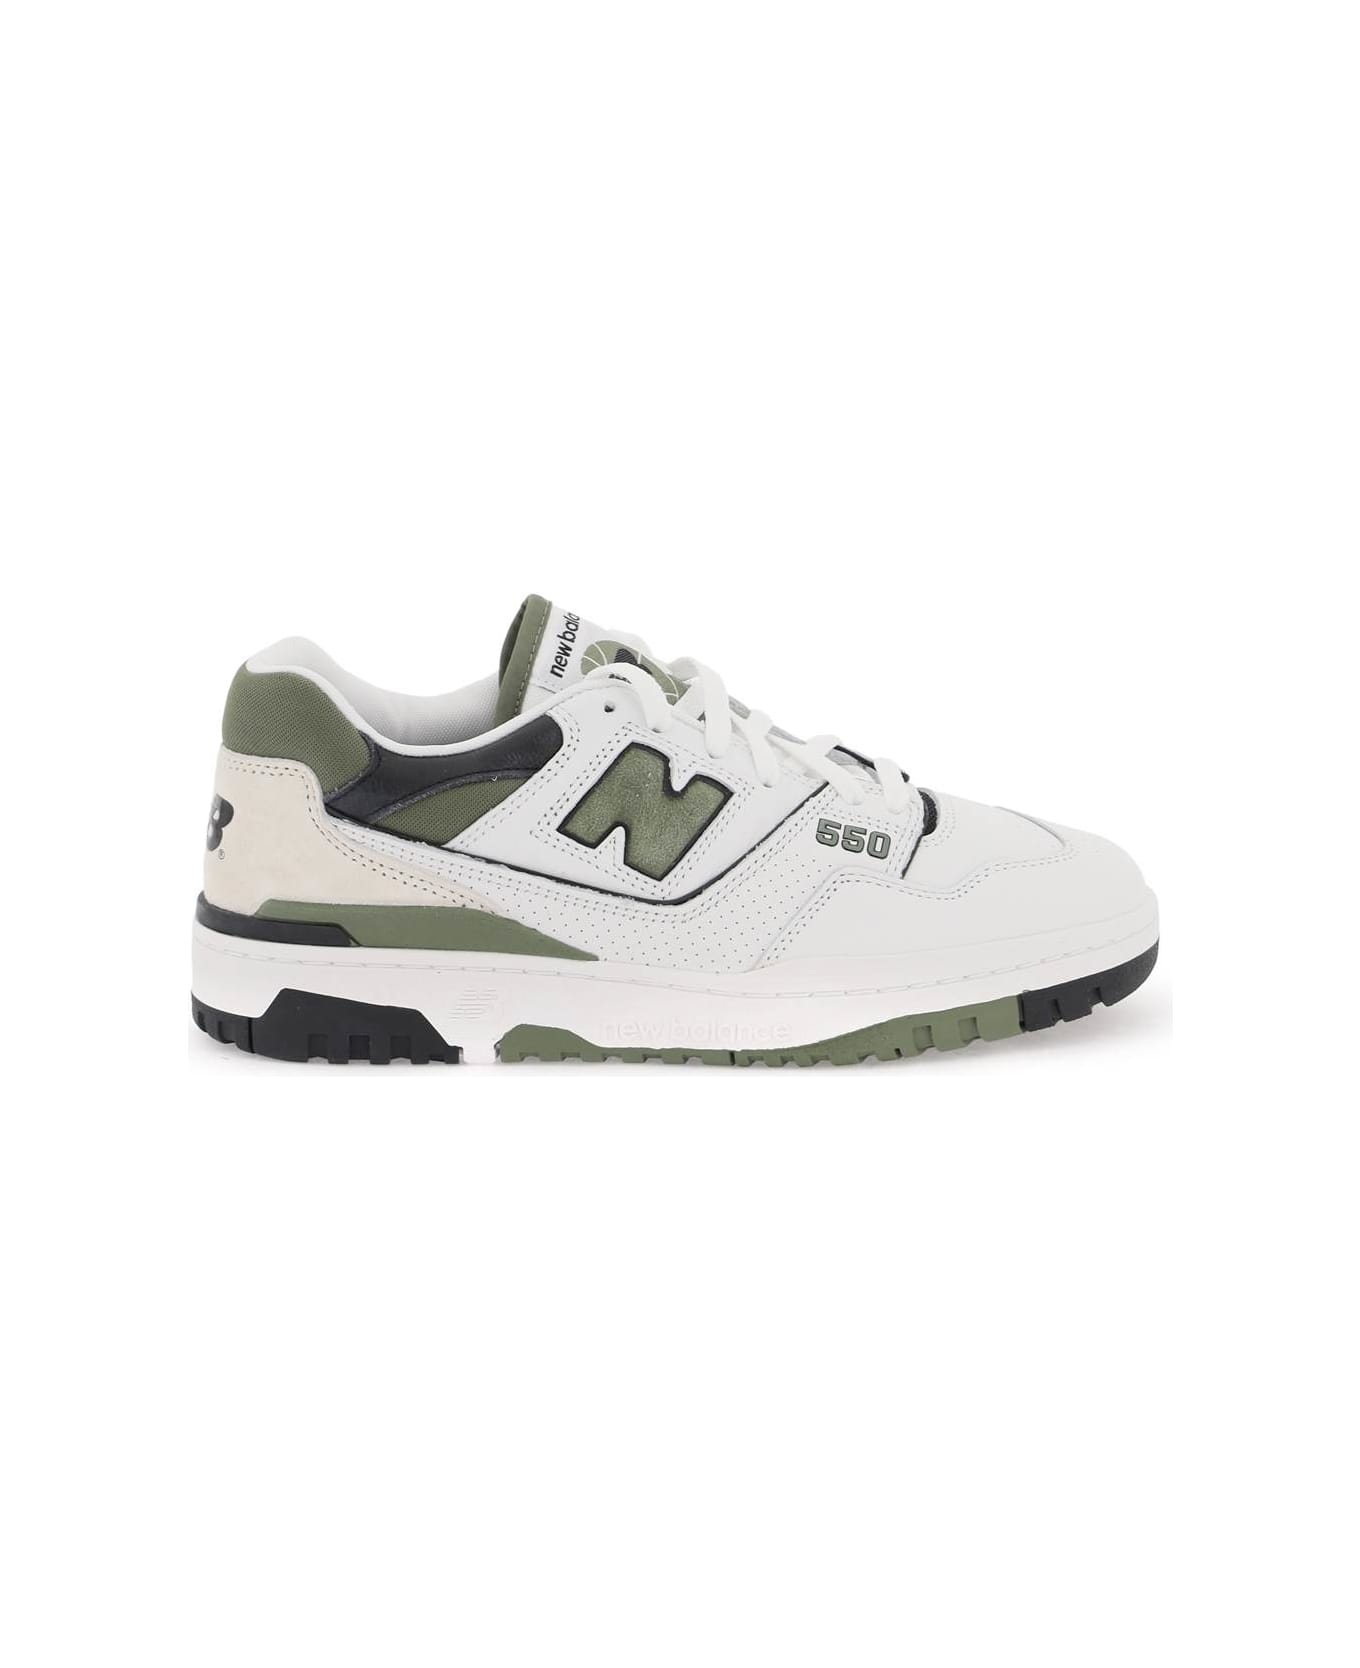 New Balance 550 Sneakers - WHITE GREEN (White) スニーカー